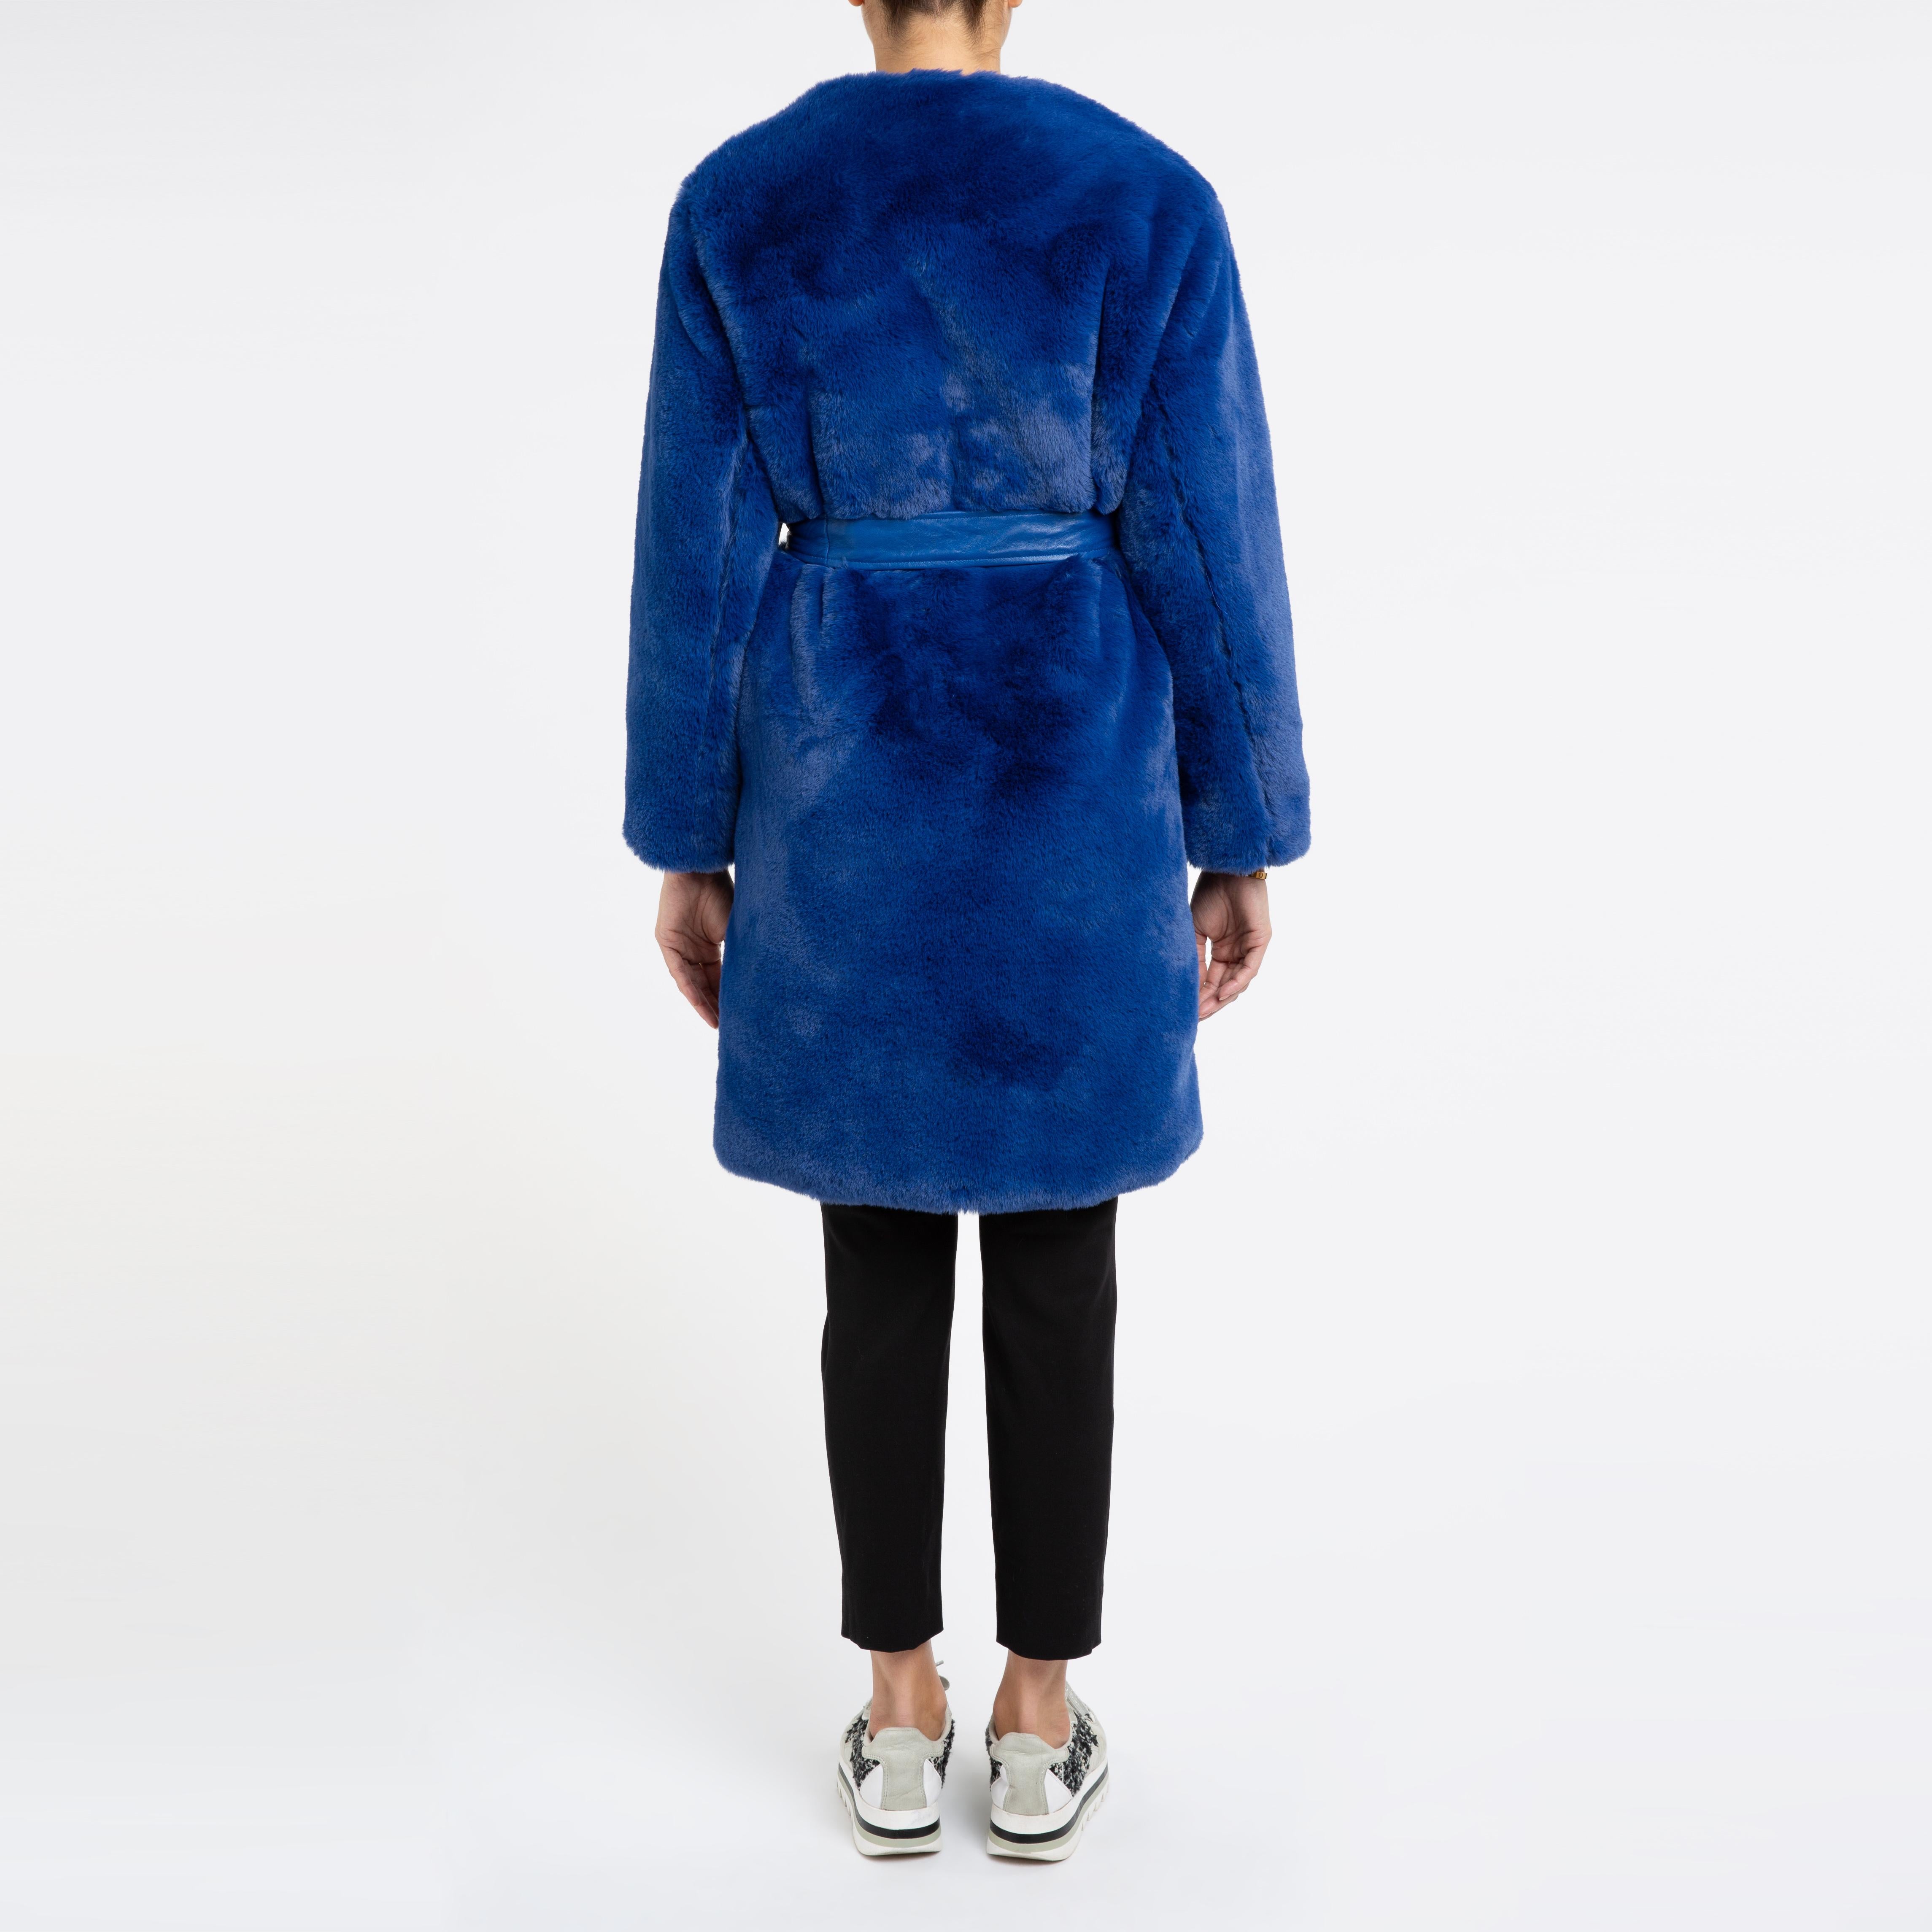 Verheyen London Serena  Collarless Faux Fur Coat in Blue - Size uk 14 For Sale 4